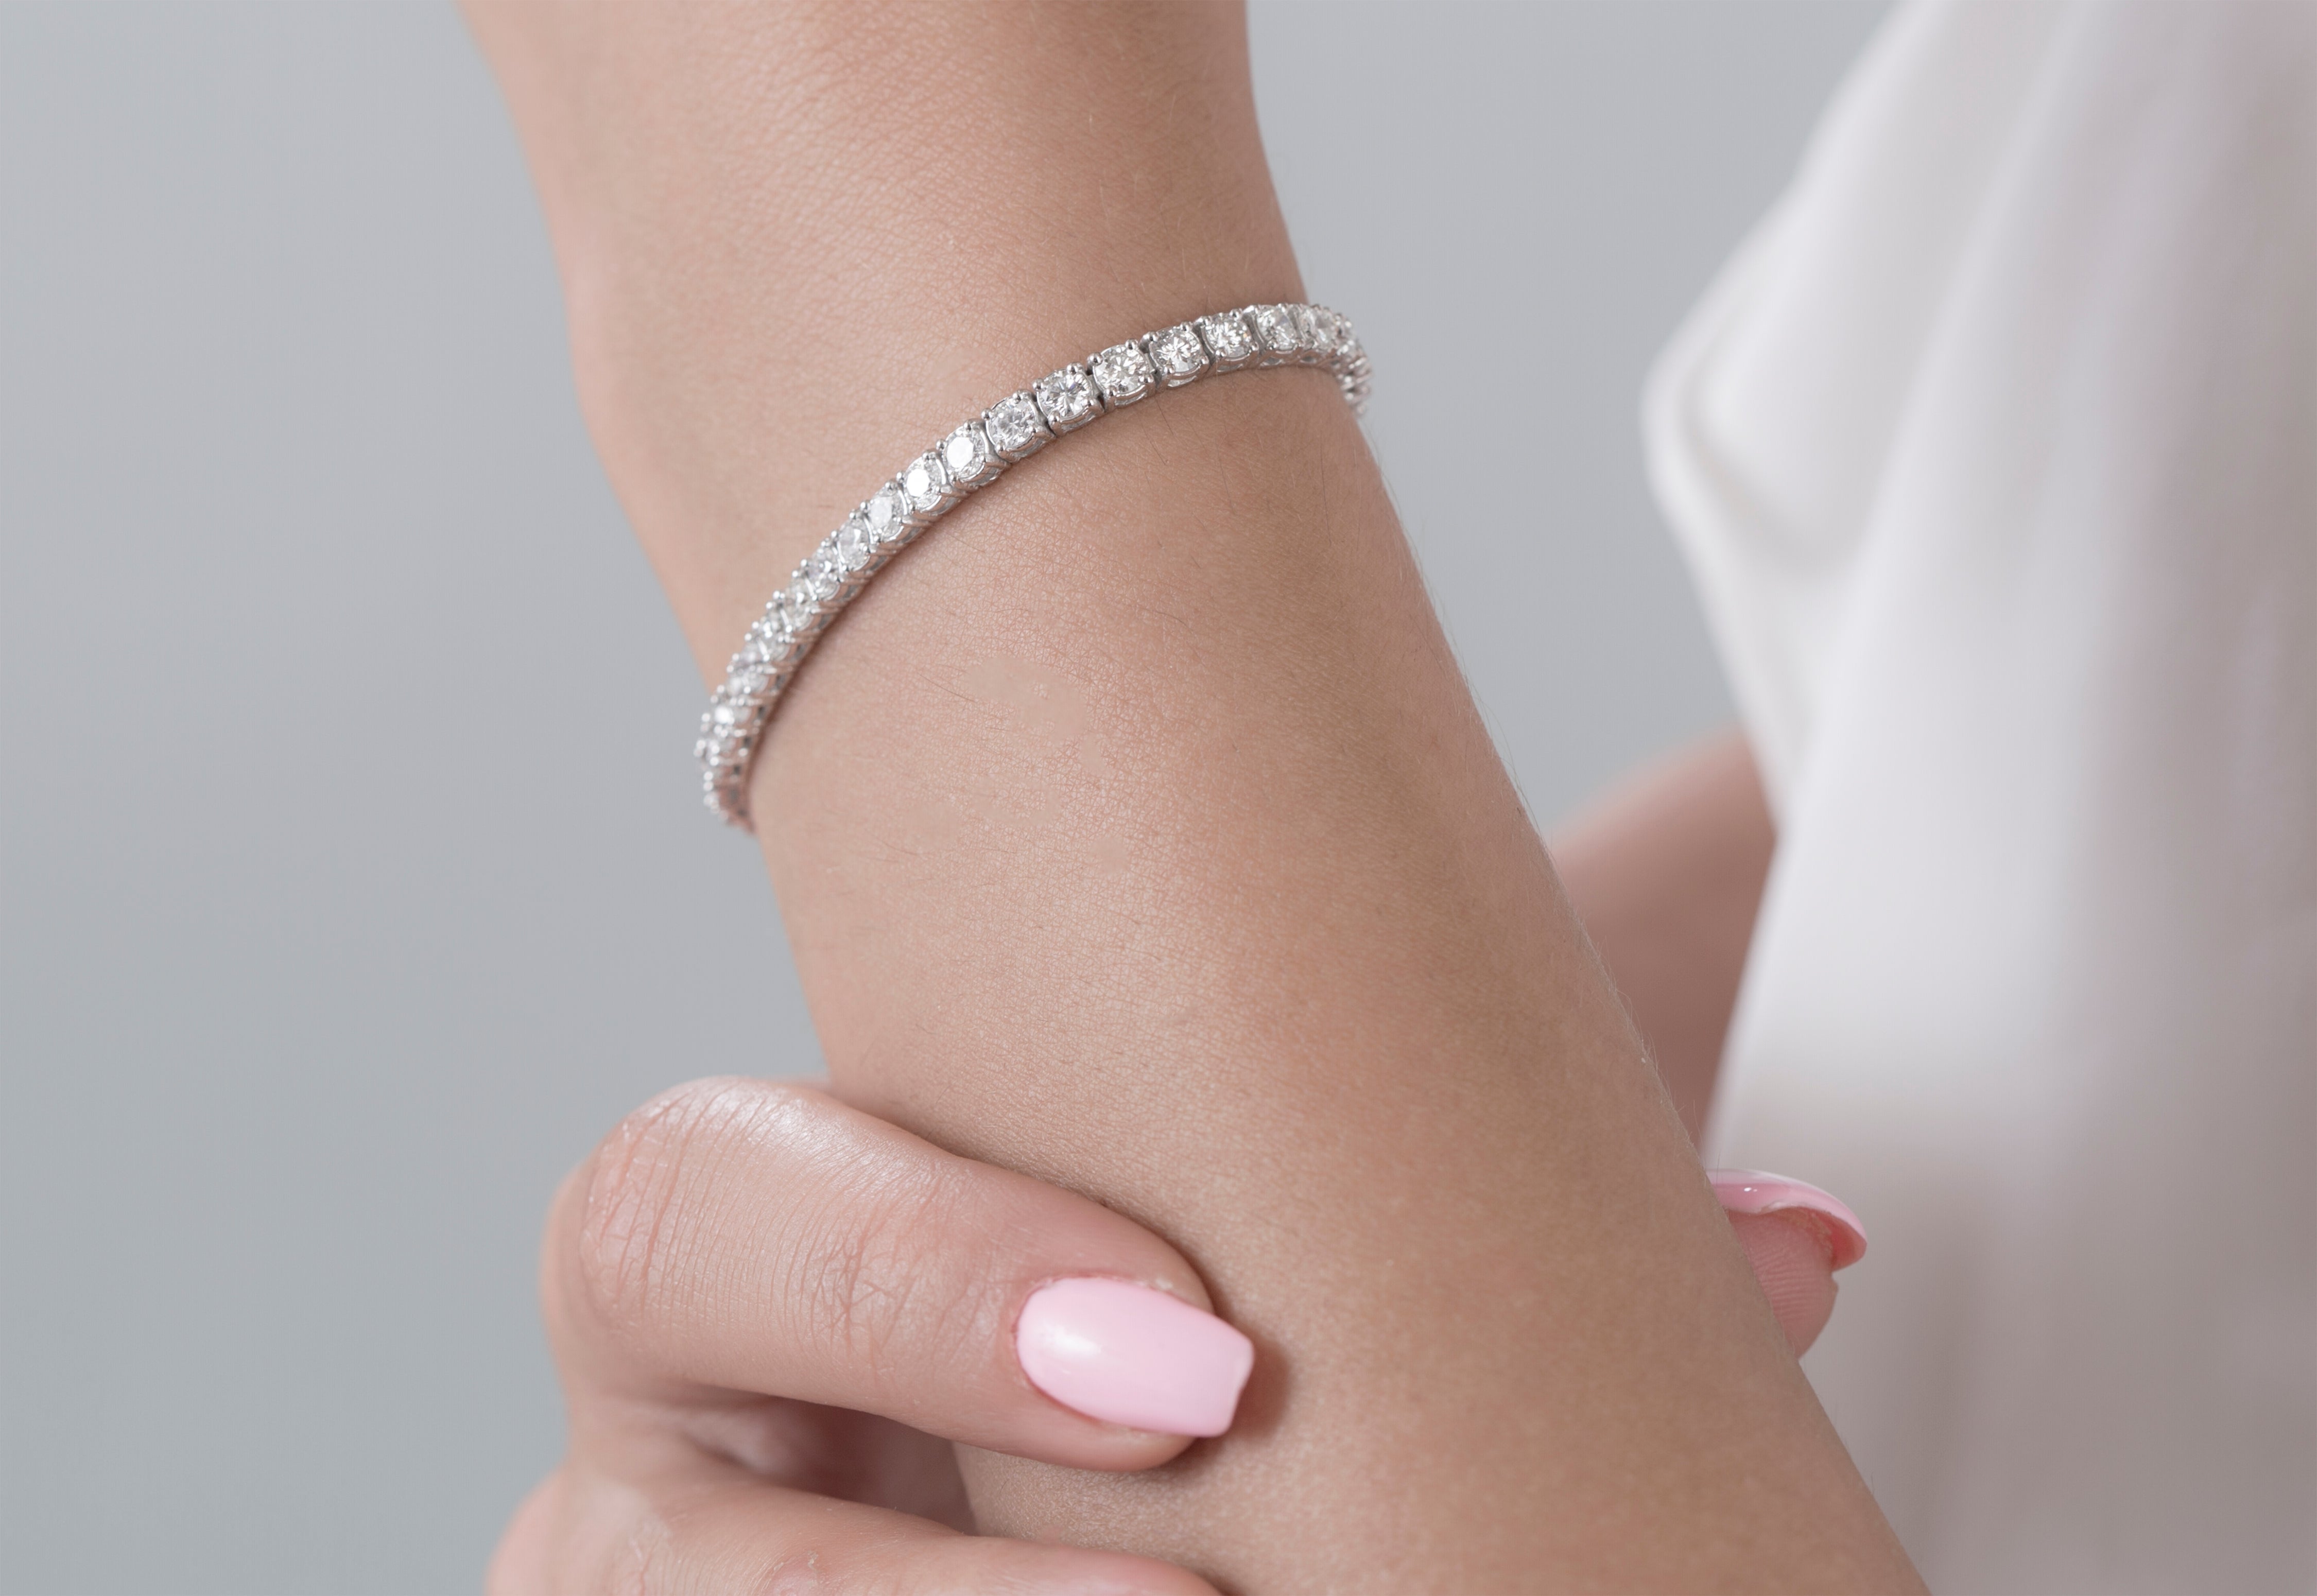 Buy Ornate Jewels 925 Silver American Diamond Bracelet Online At Best Price  @ Tata CLiQ